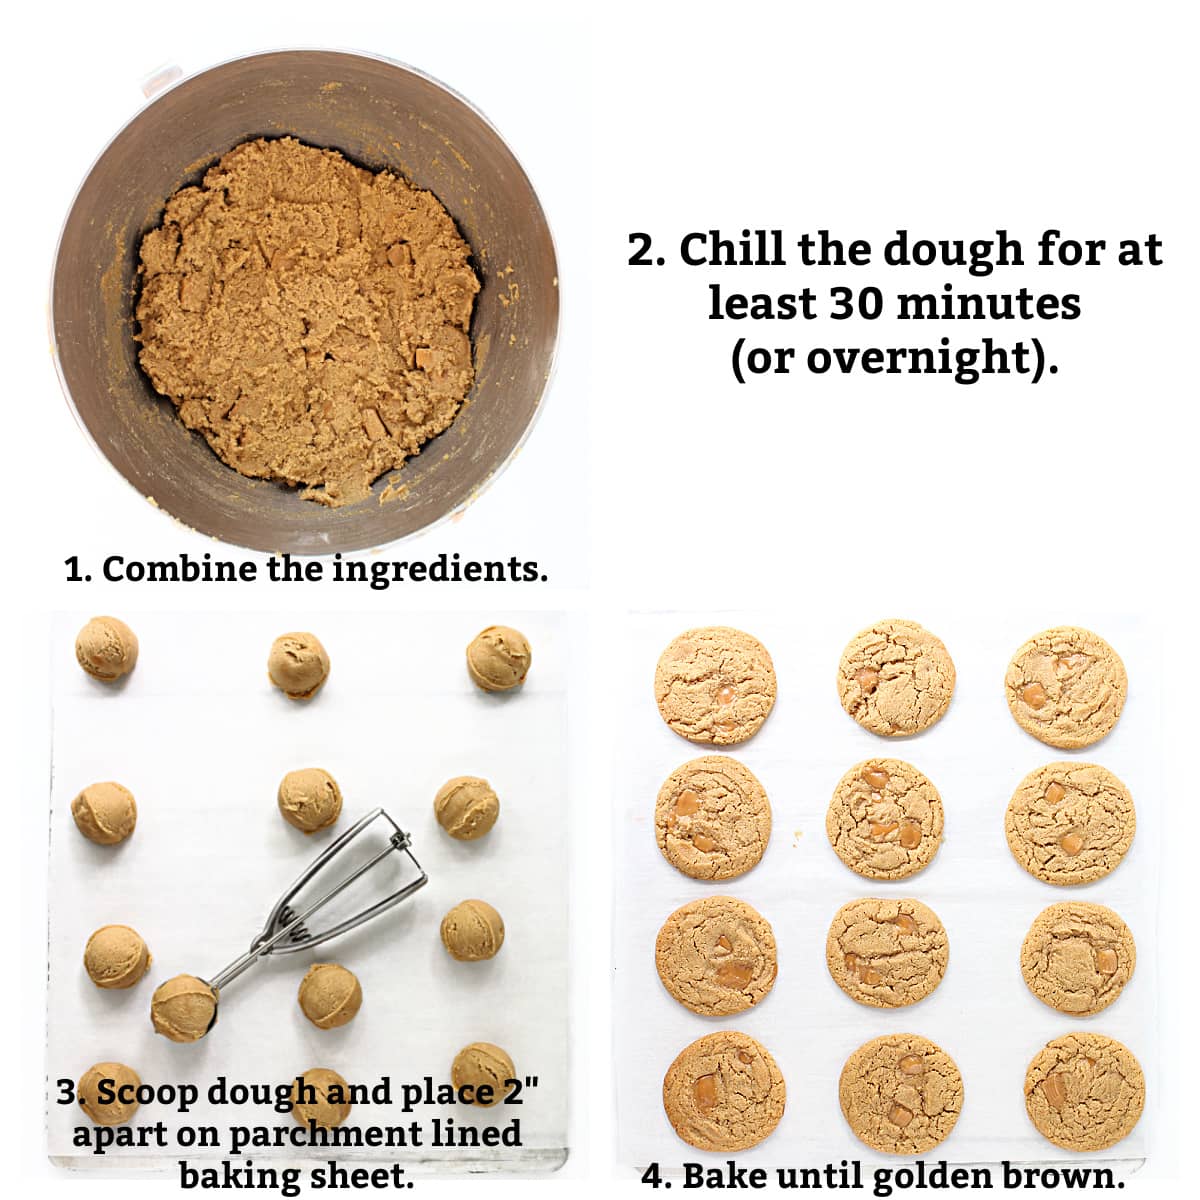 Recipe instructions; combine ingredients, chill dough, scoop dough balls onto baking sheet, bake until golden brown.